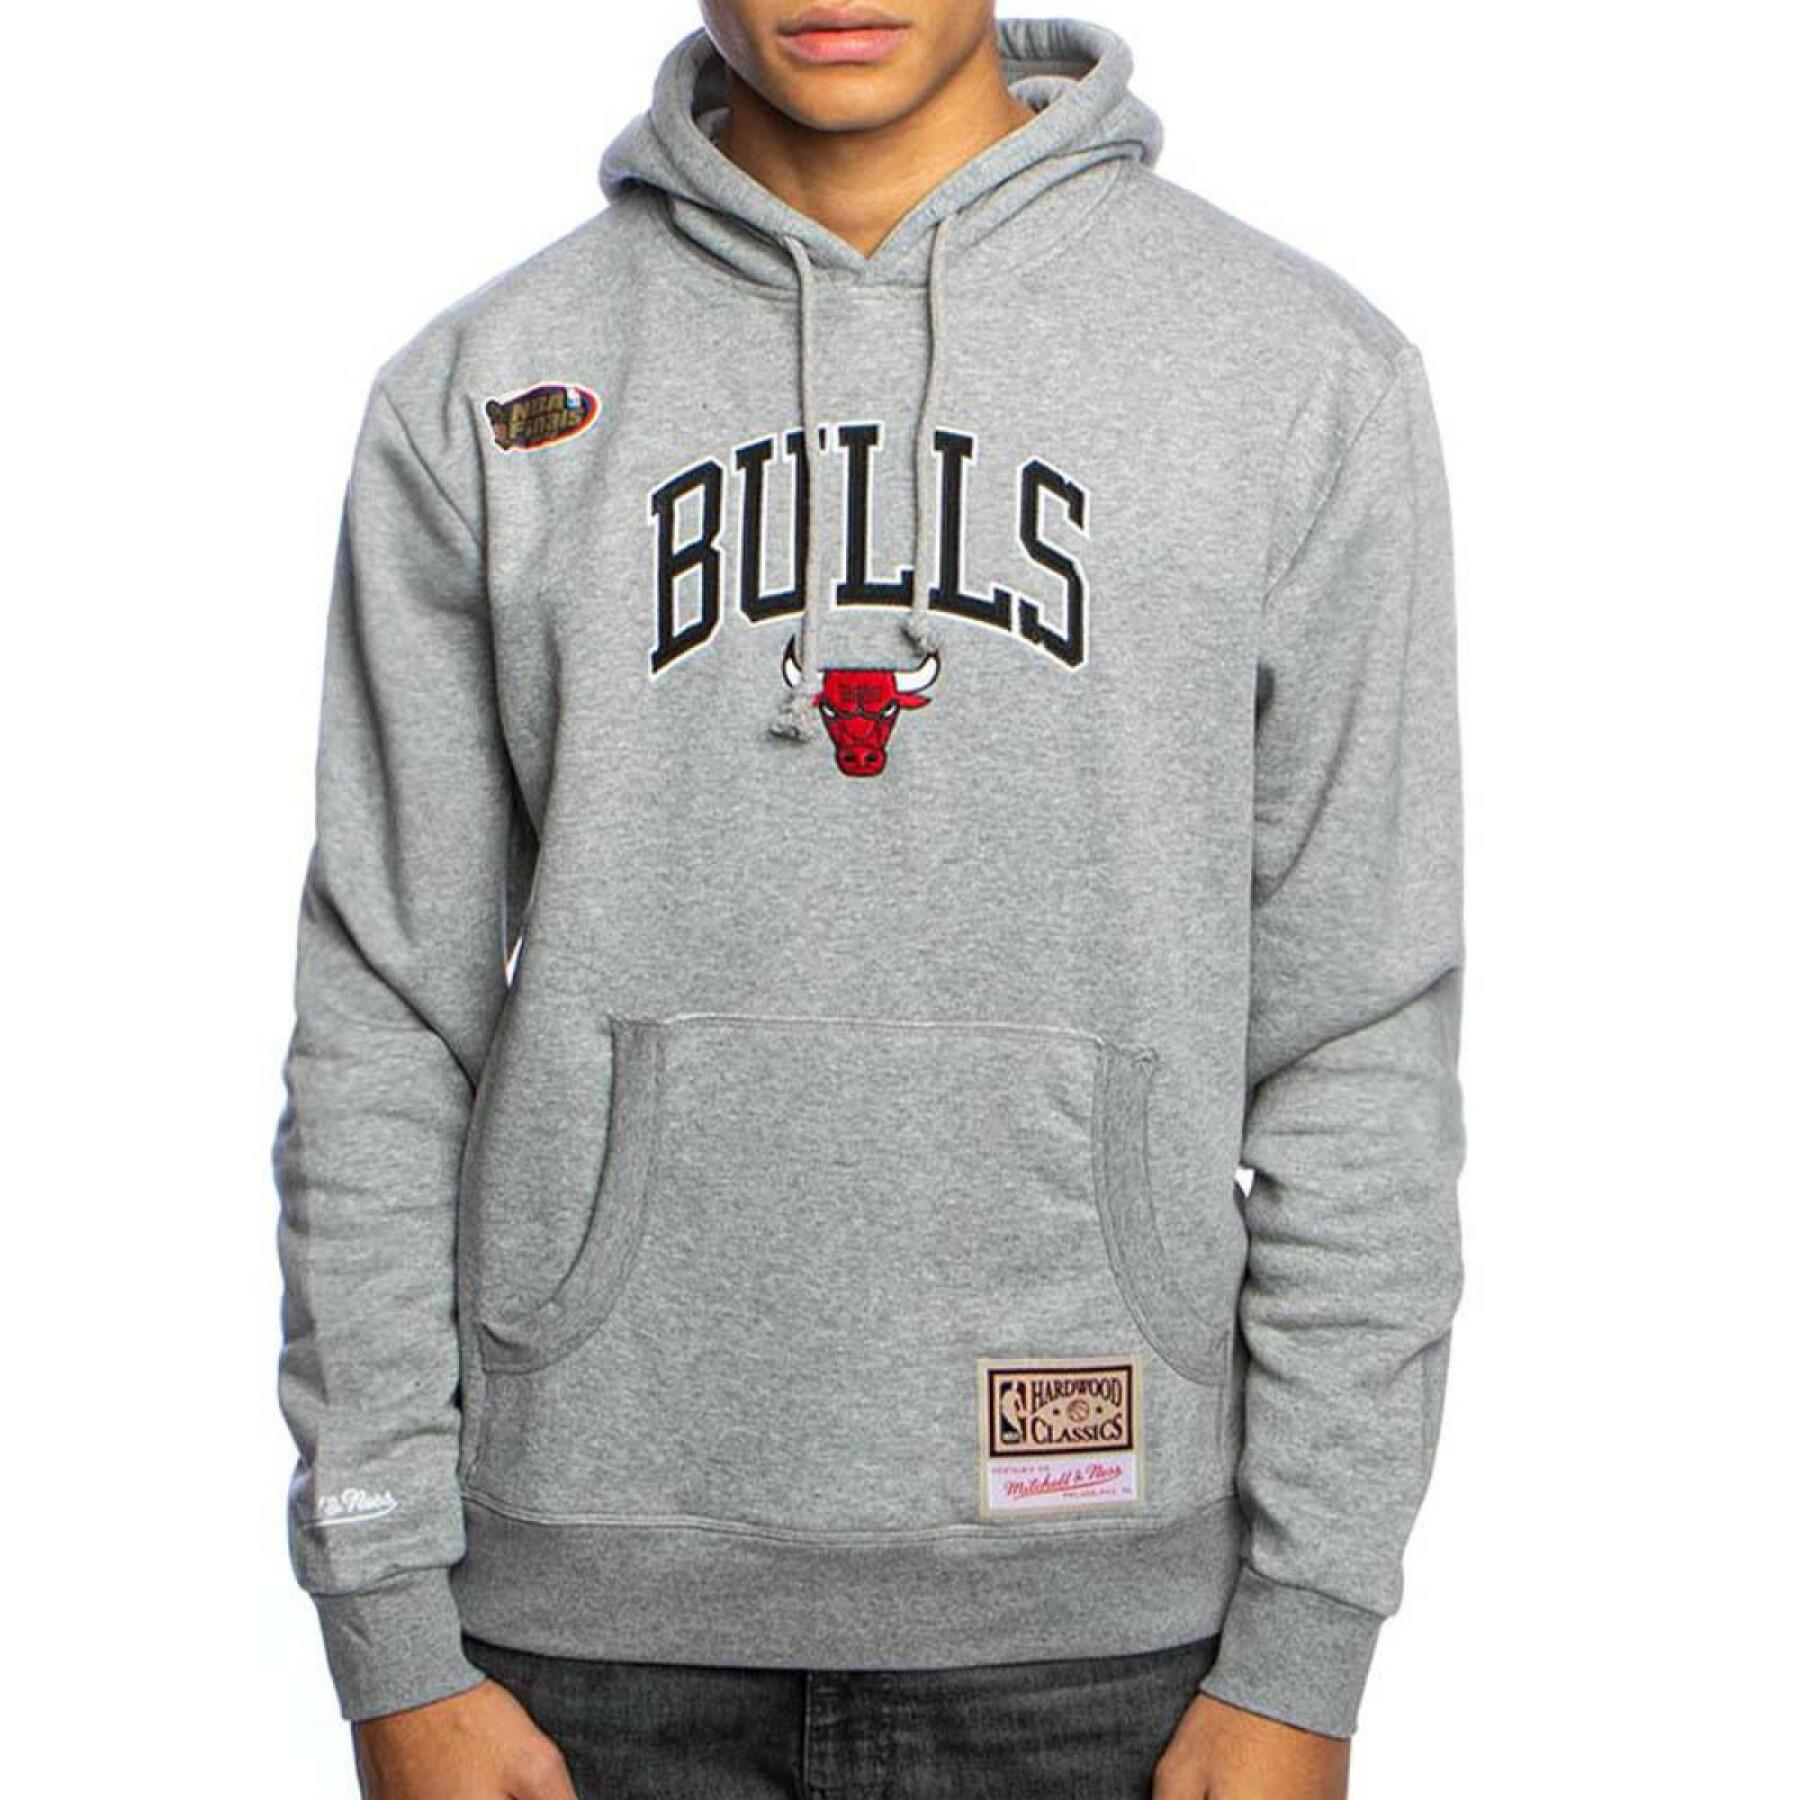 Arch hoodie Chicago Bulls 2021/22